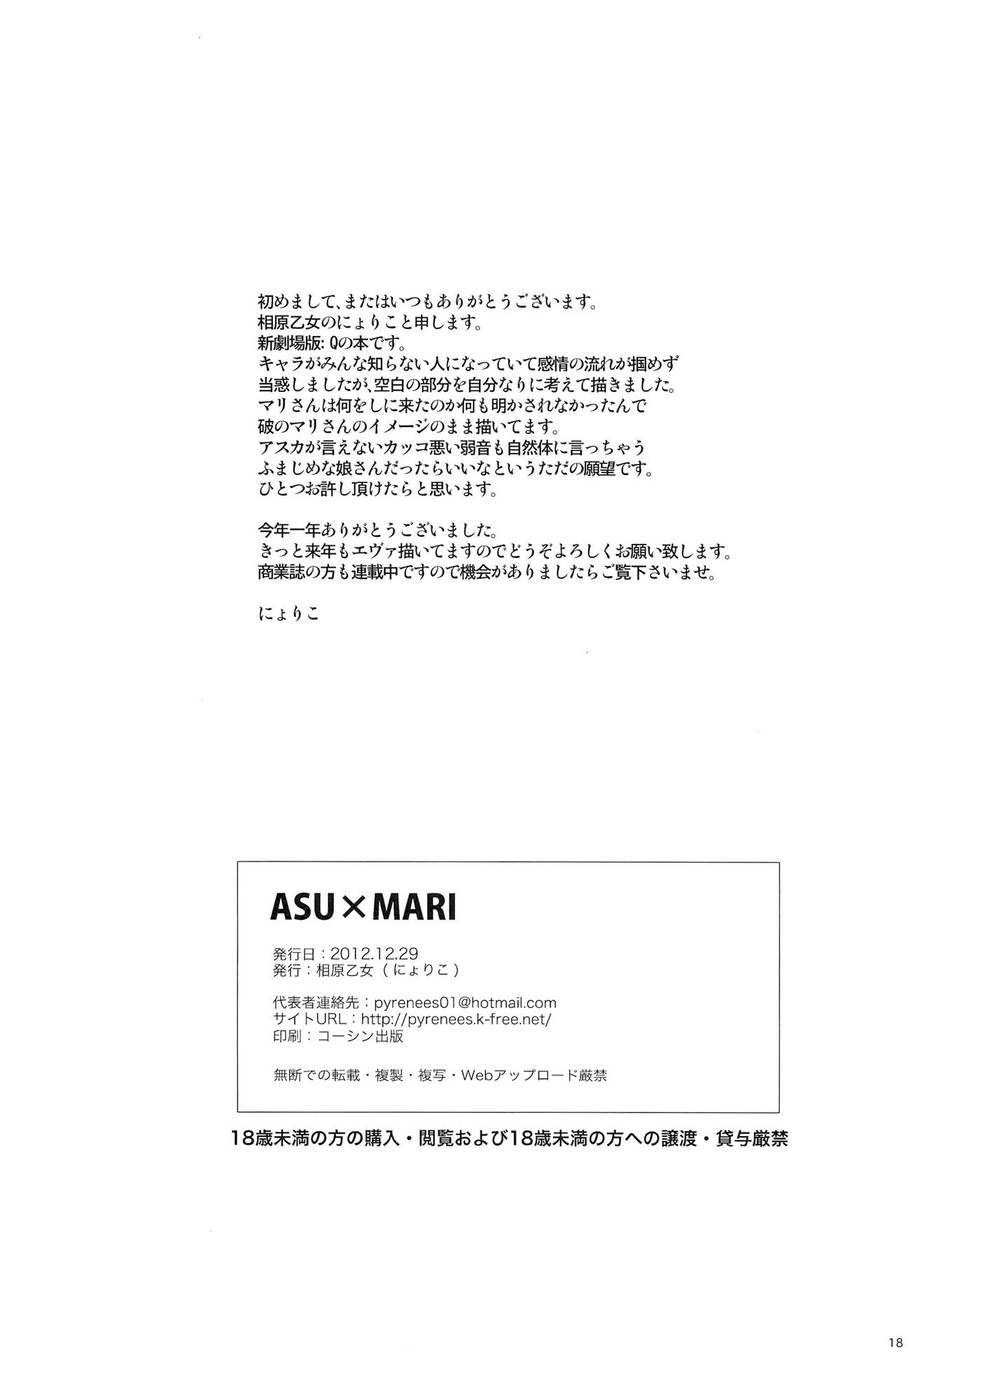 Hentai Manga Comic-ASU x MARI-Read-17